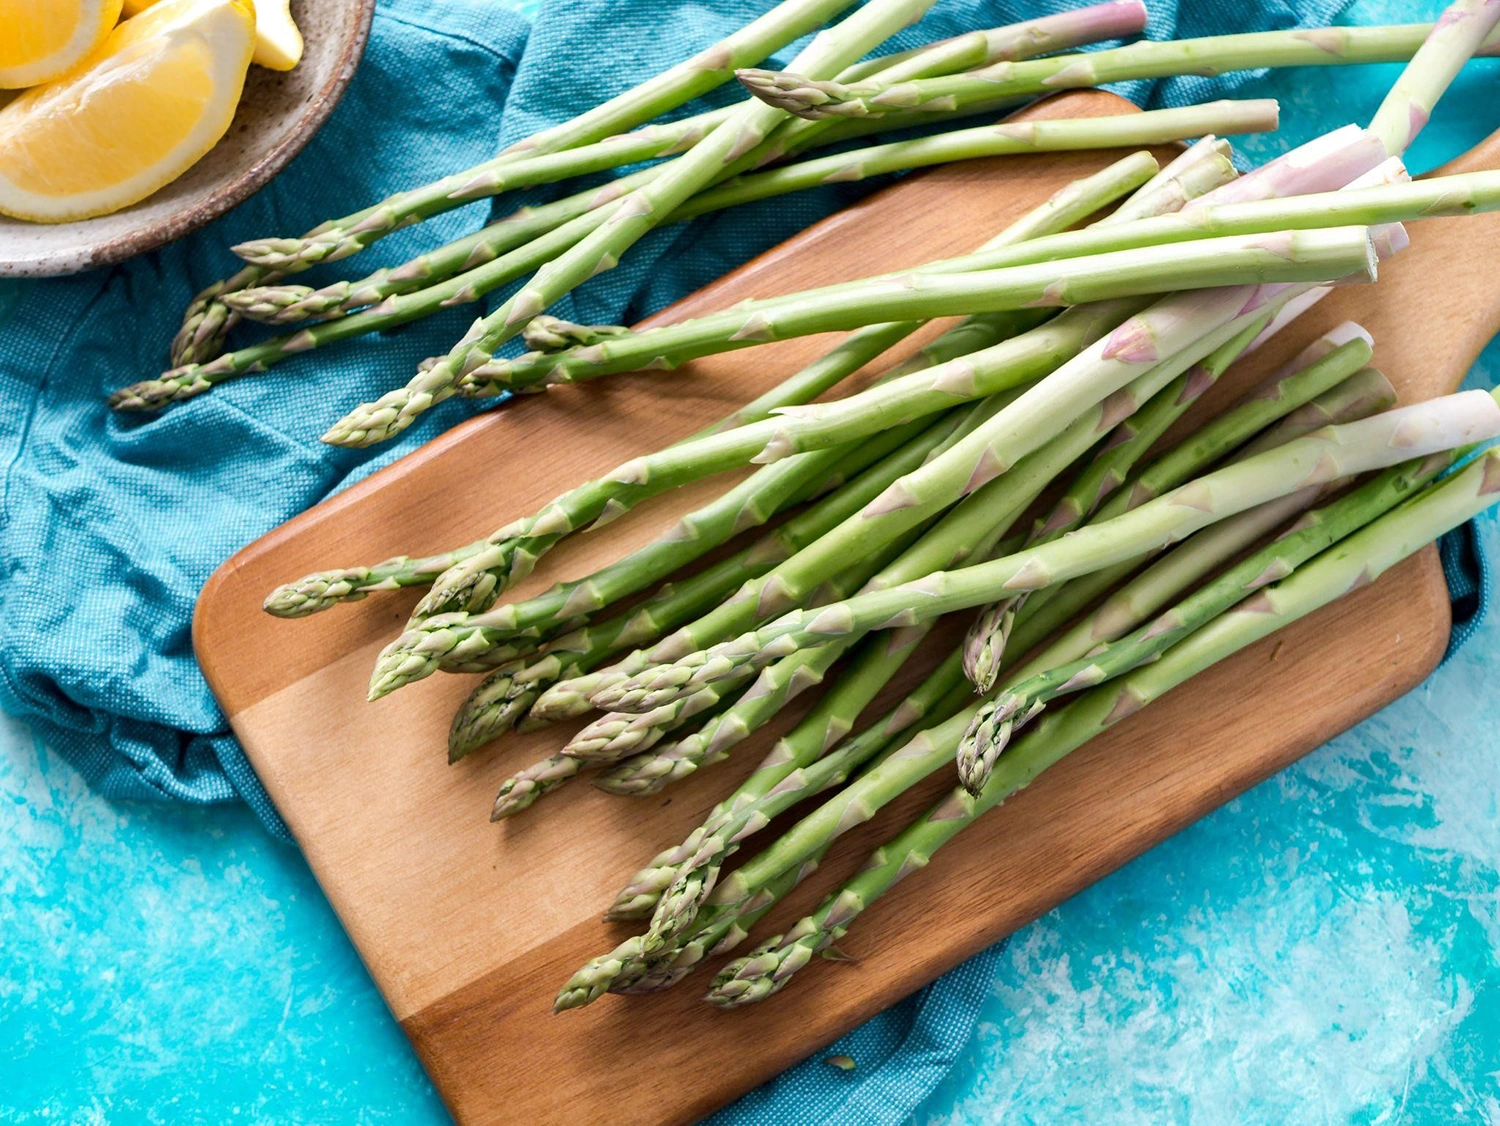 Fresh asparagus on a cutting board with lemon slices, perfect for a seasonal menu.